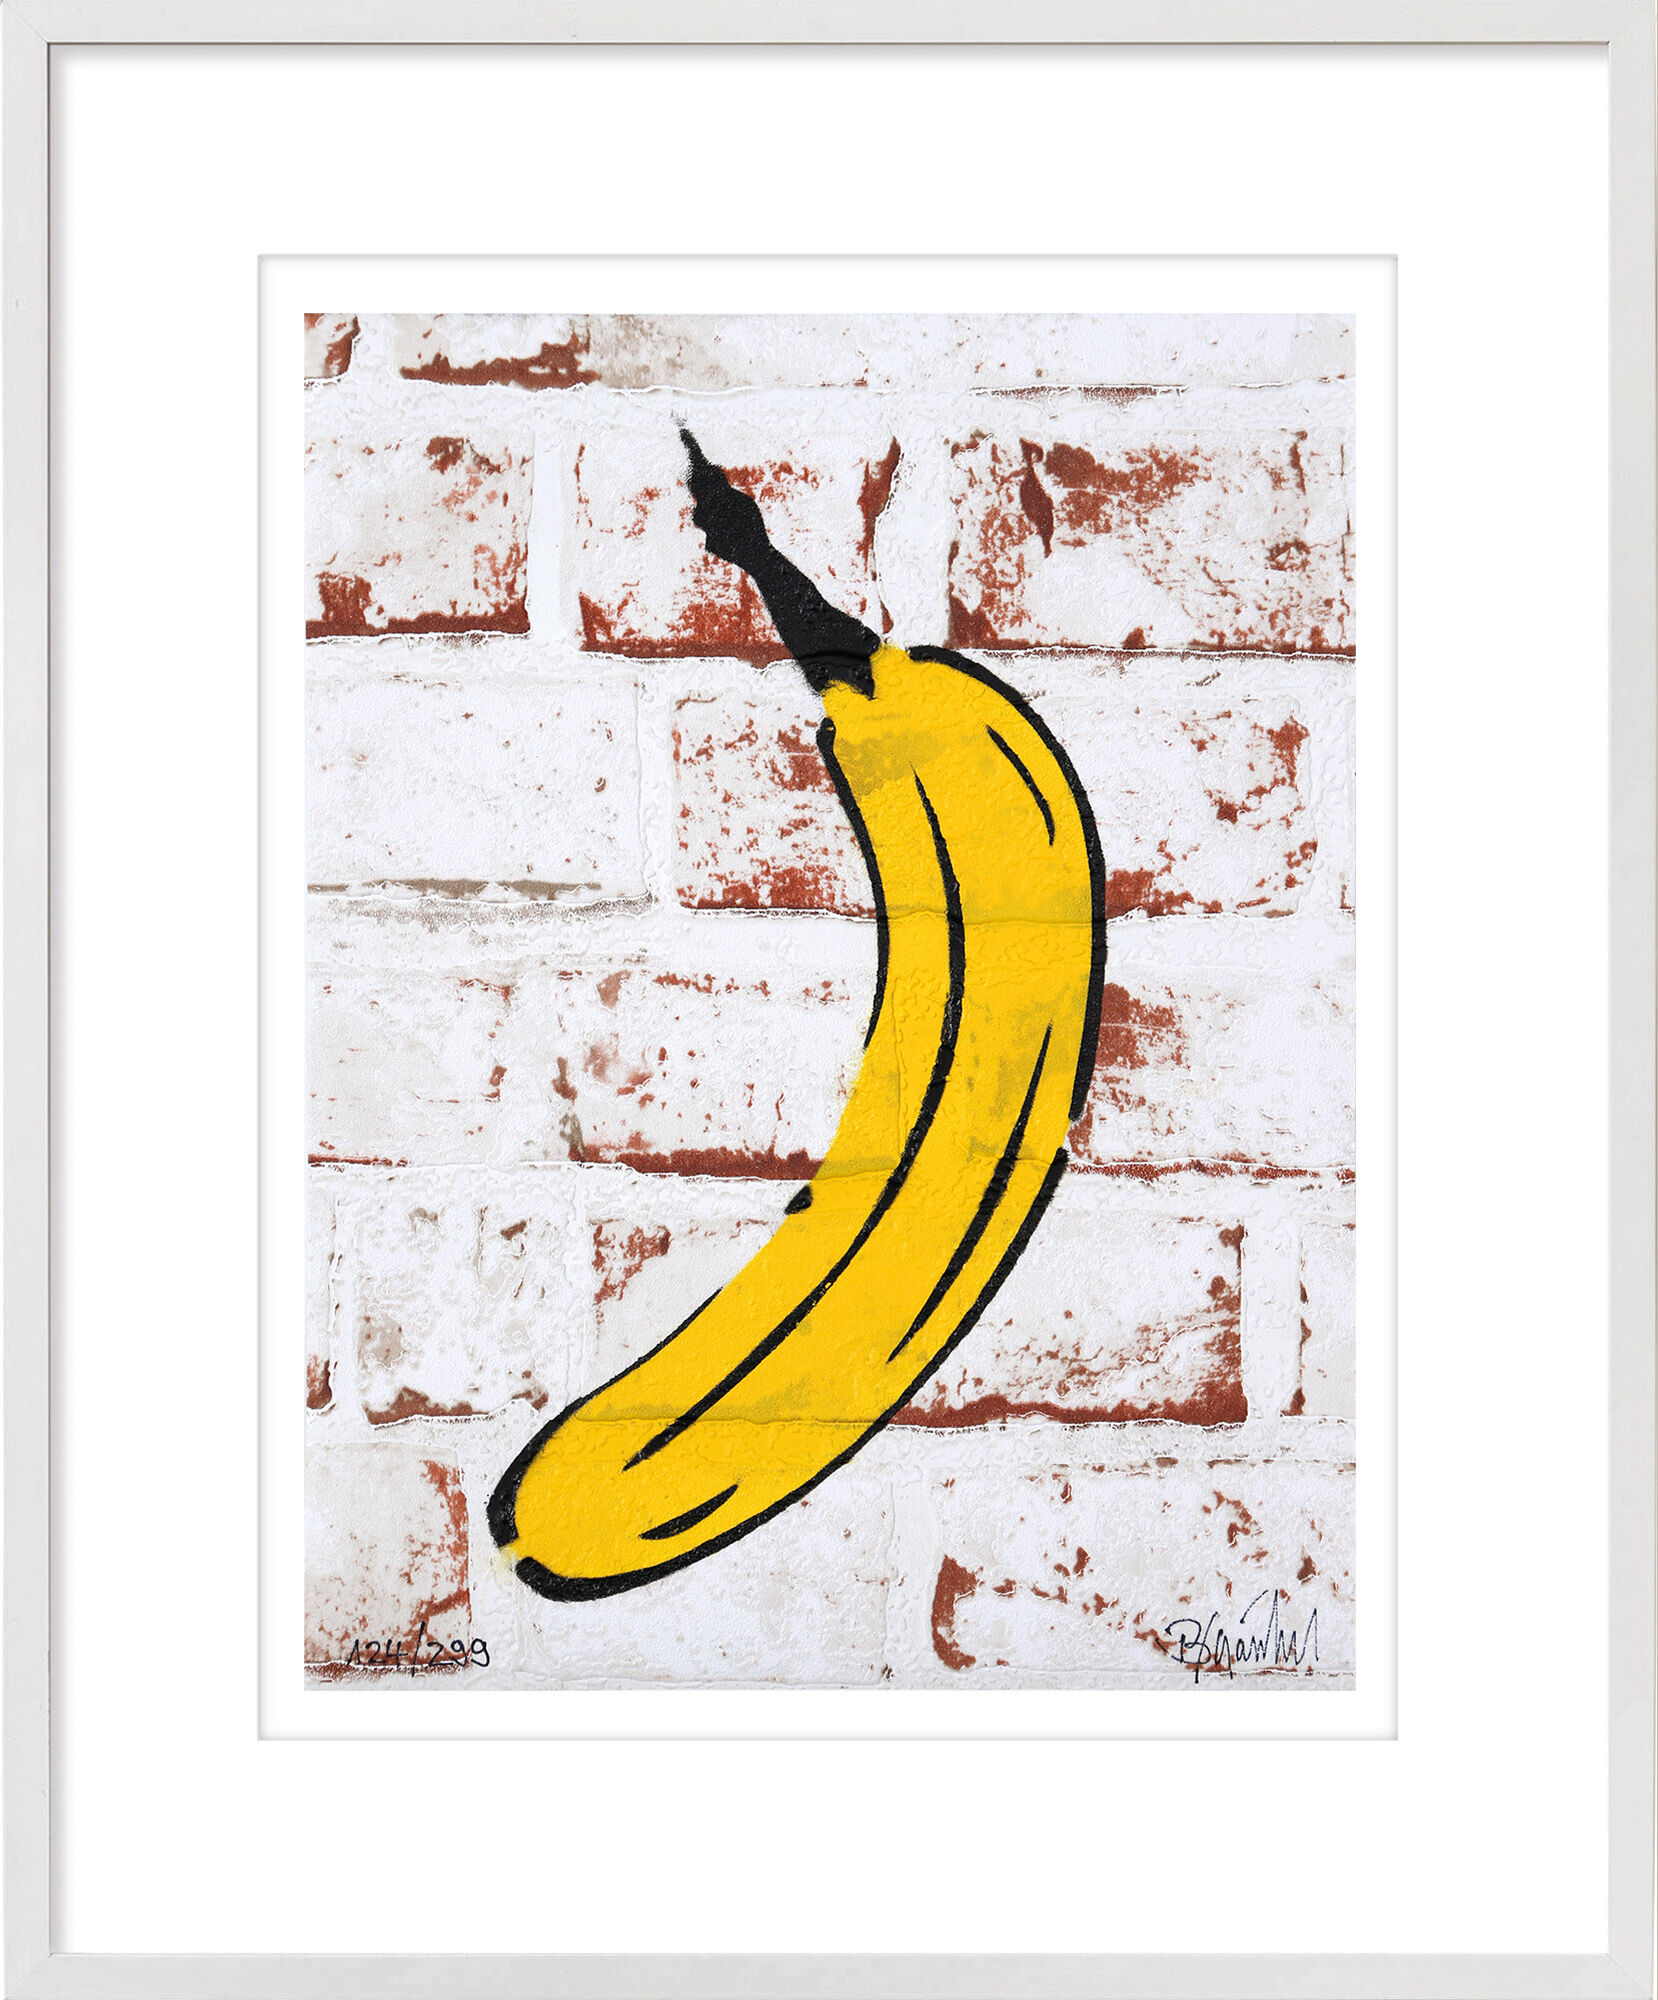 Picture "Wall Banana" (2019) by Thomas Baumgärtel